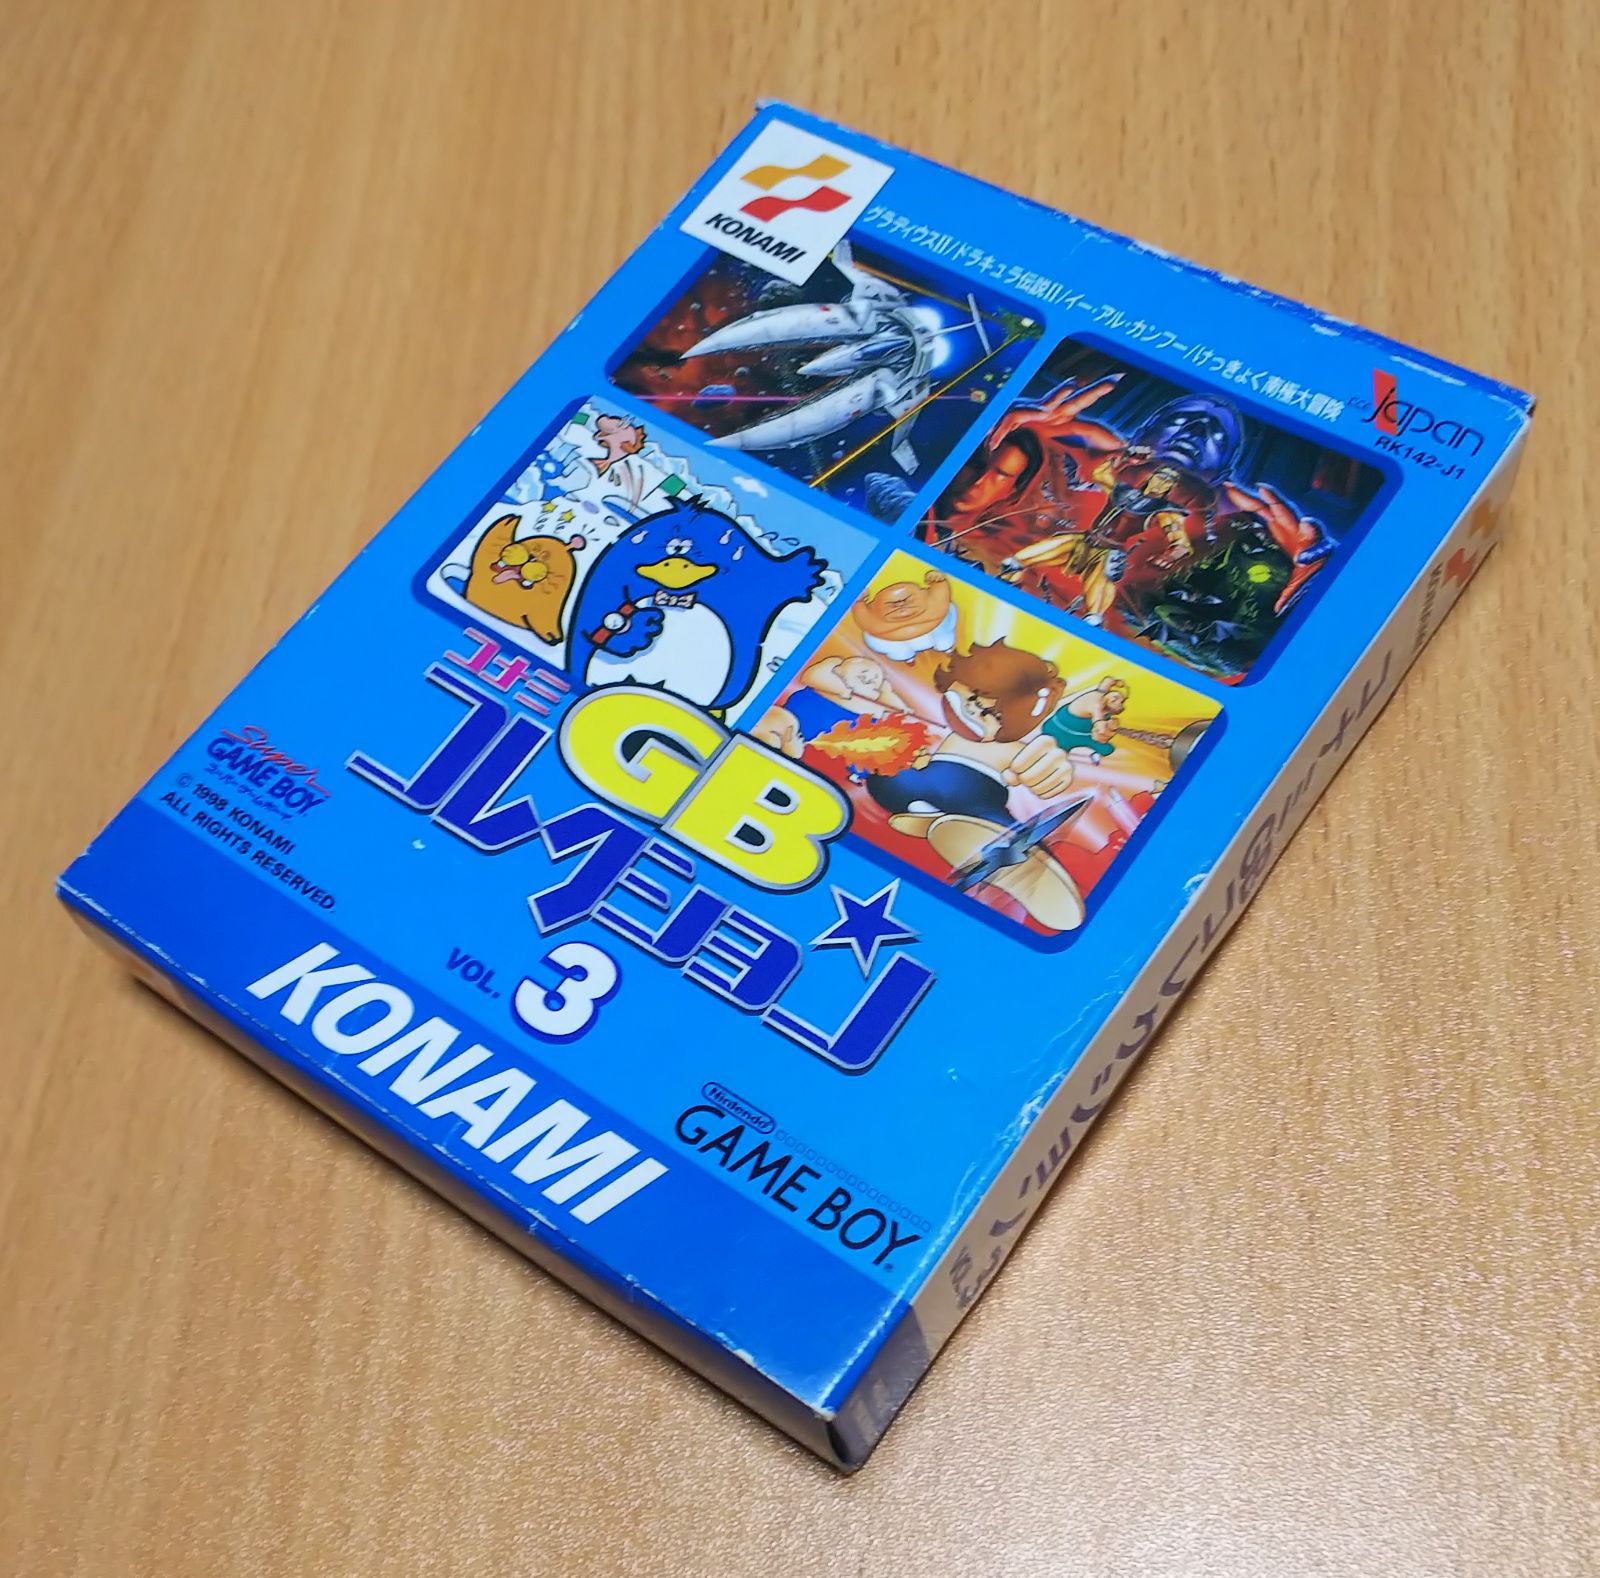 KONAMIの#コナミGBコレクションvol.3 ゲームボーイ - www.sieg-vergaser.de